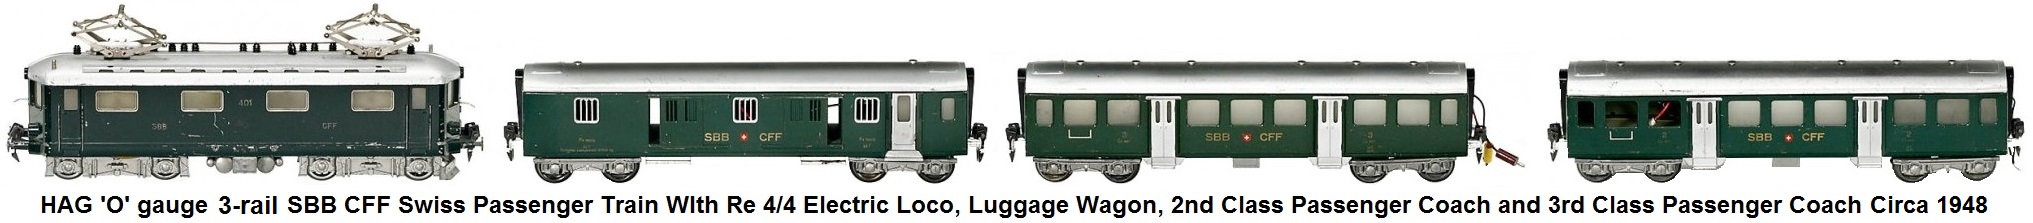 HAG 'O' gauge SBB CFF Swiss Passenger train with RE 4/4 loco, 3rd class passenger coach, 2nd class passenger coach luggage wagon